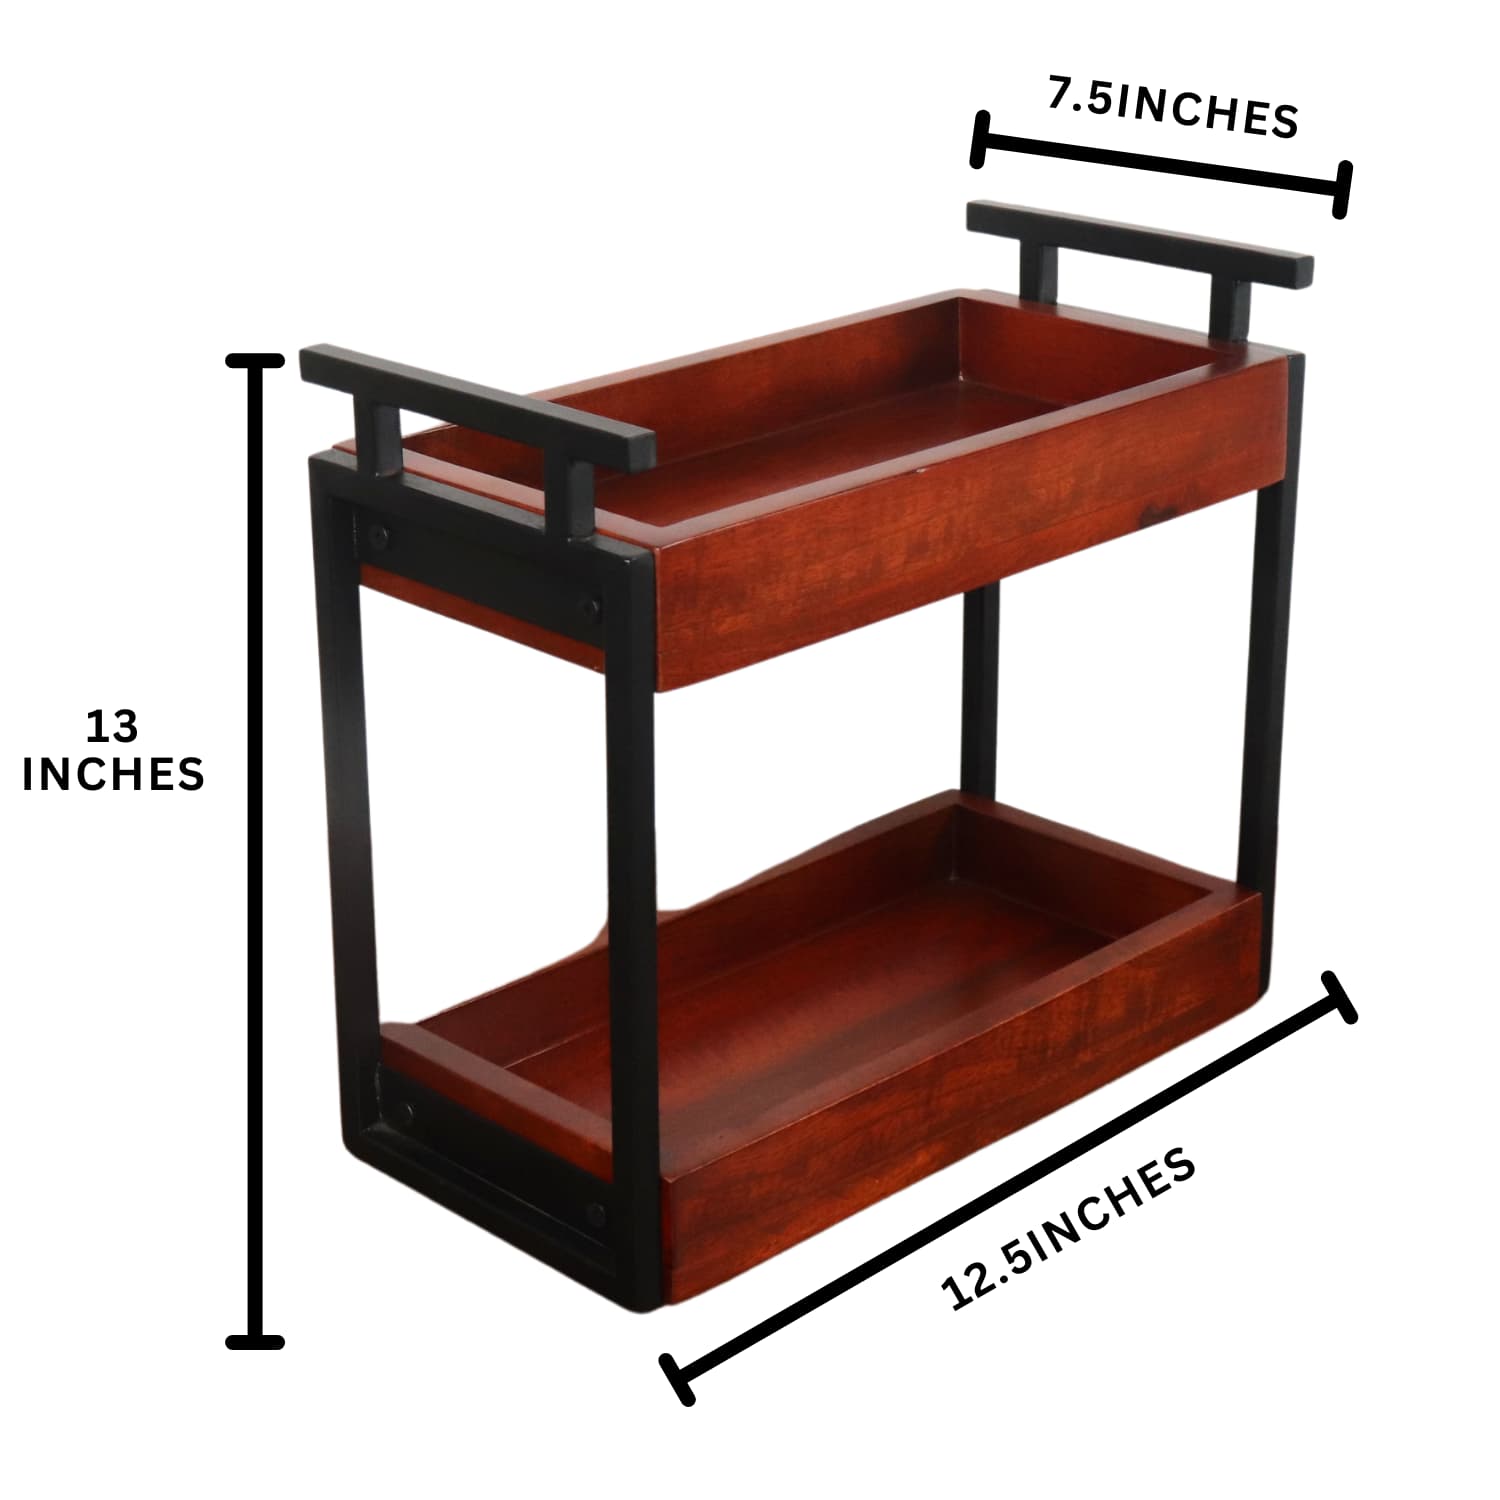 Woodmet loosebucket Kitchen organizer dimensions